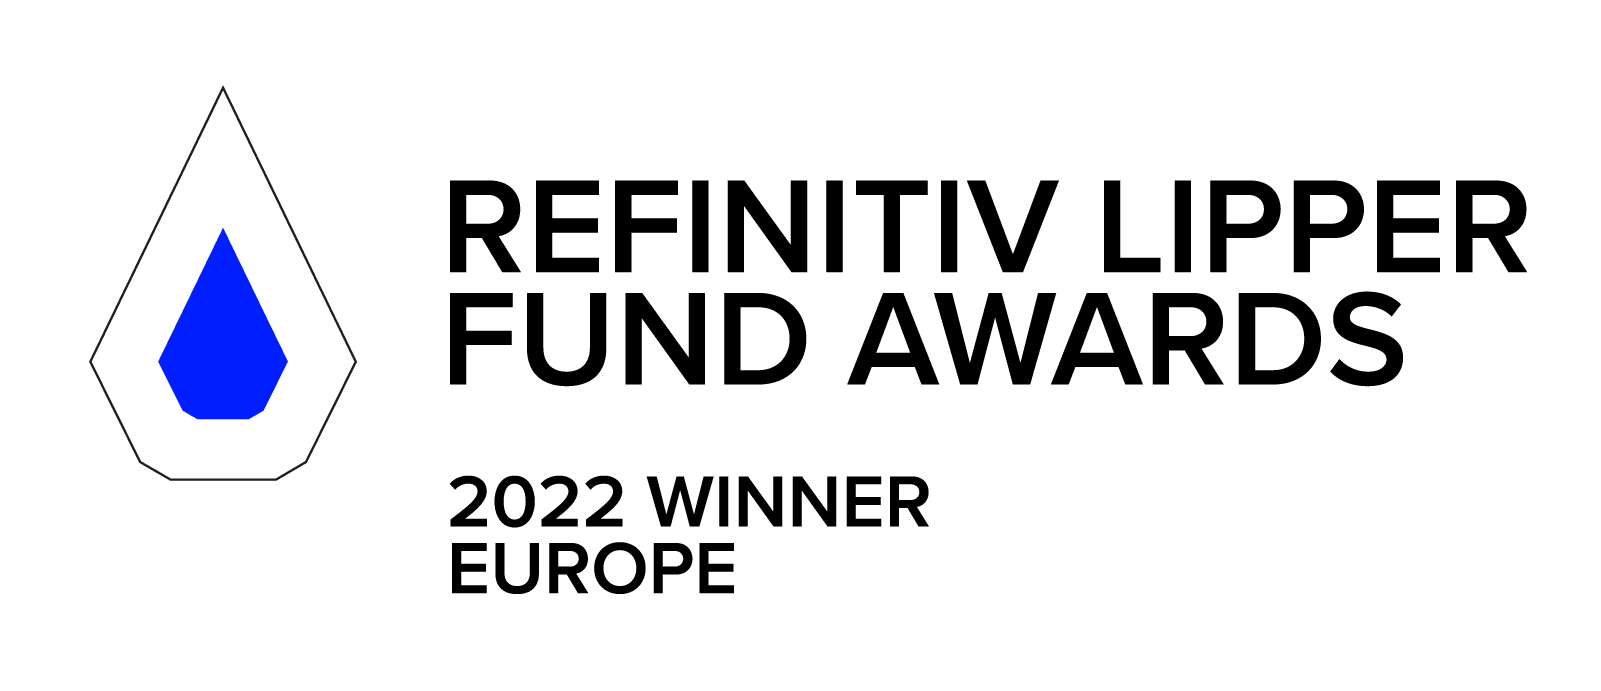 RFL Awards Winner - Europe